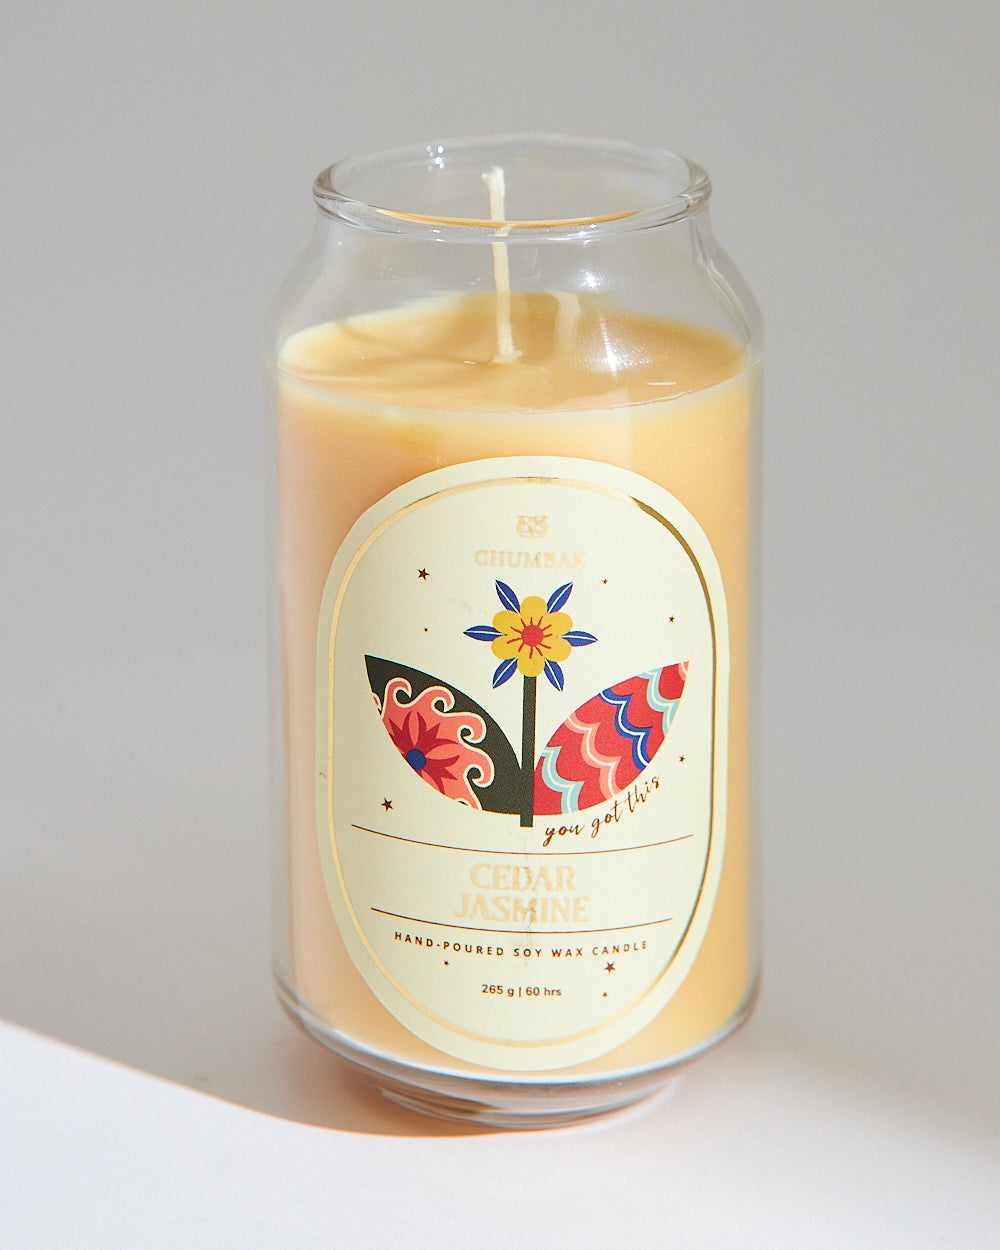 Cedar Jasmine Soy Wax Candle, 265g